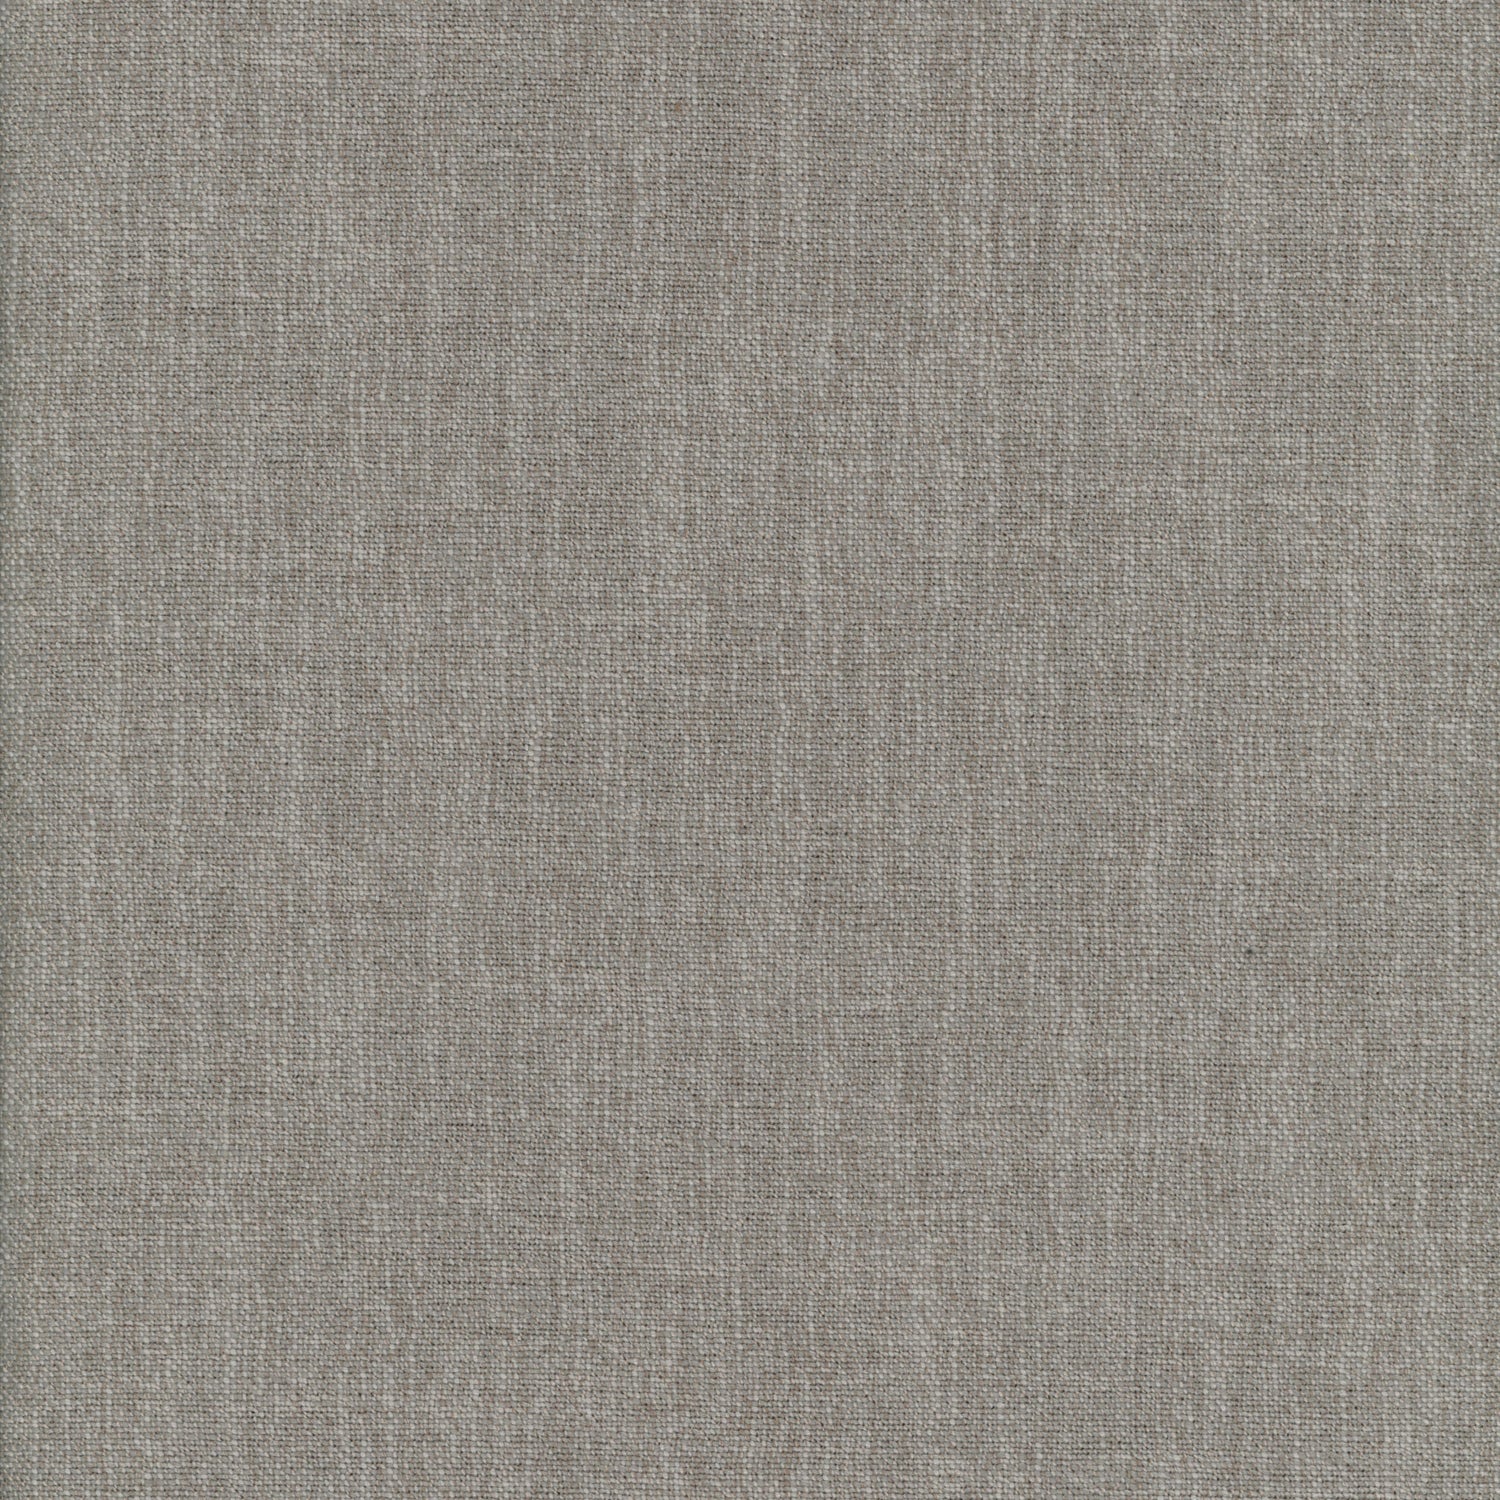 7614-15 Fabric - Stickley Brand